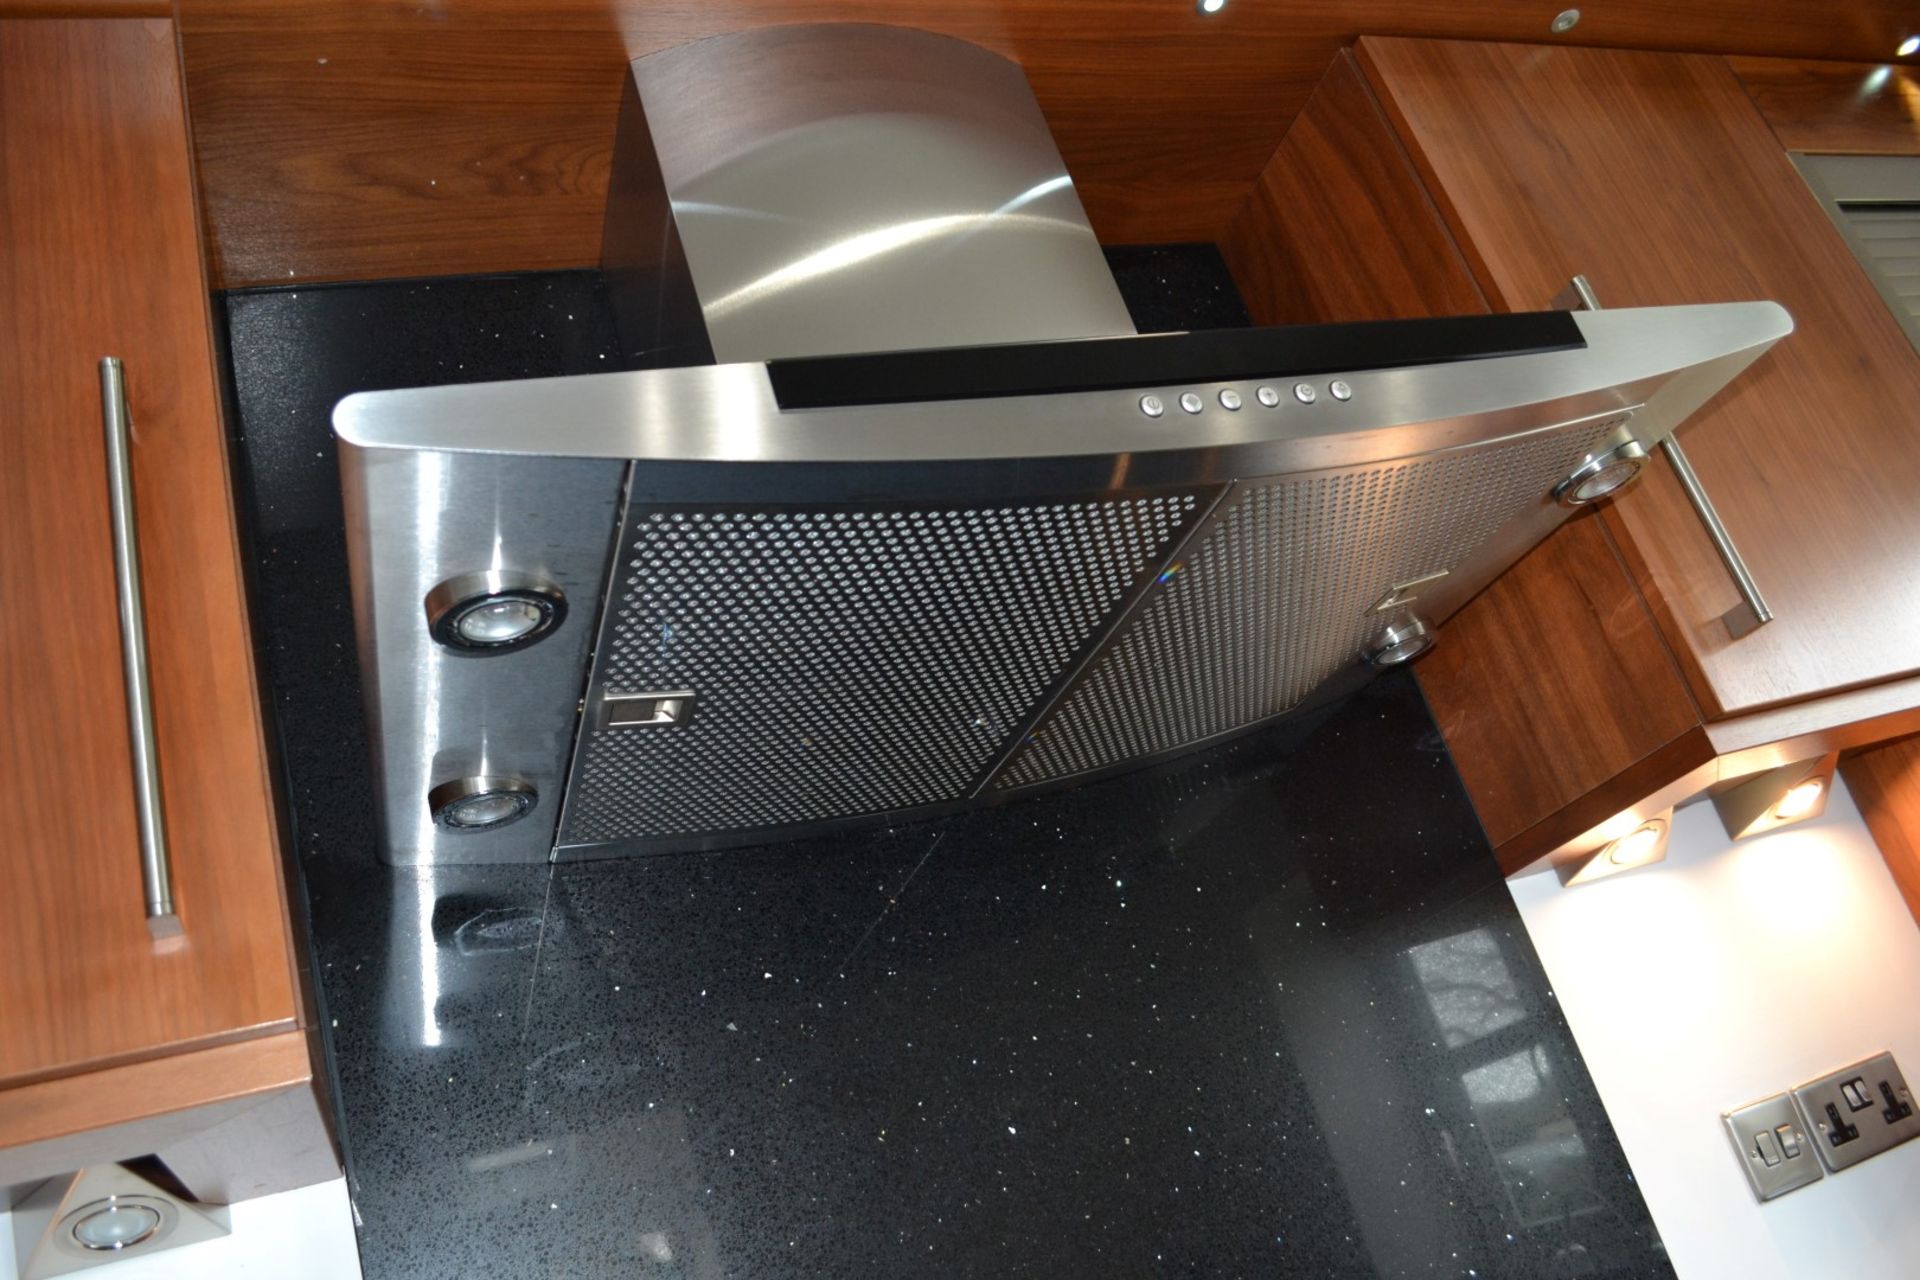 1 x Kitchen Design Bespoke Fitted Kitchen With Silestone Worktops & Neff Appliances - Superb - Image 39 of 59